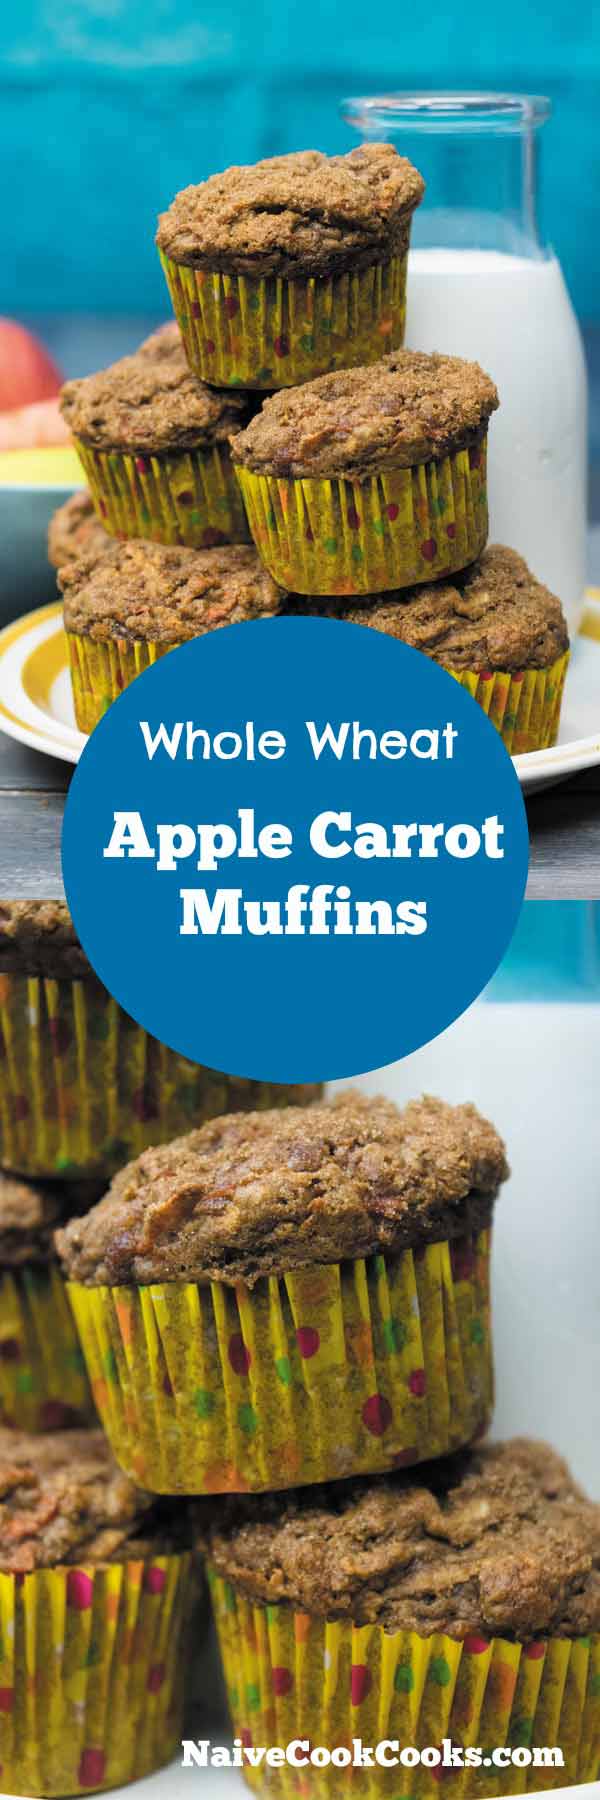 Carrot Apple Muffins for breakfast